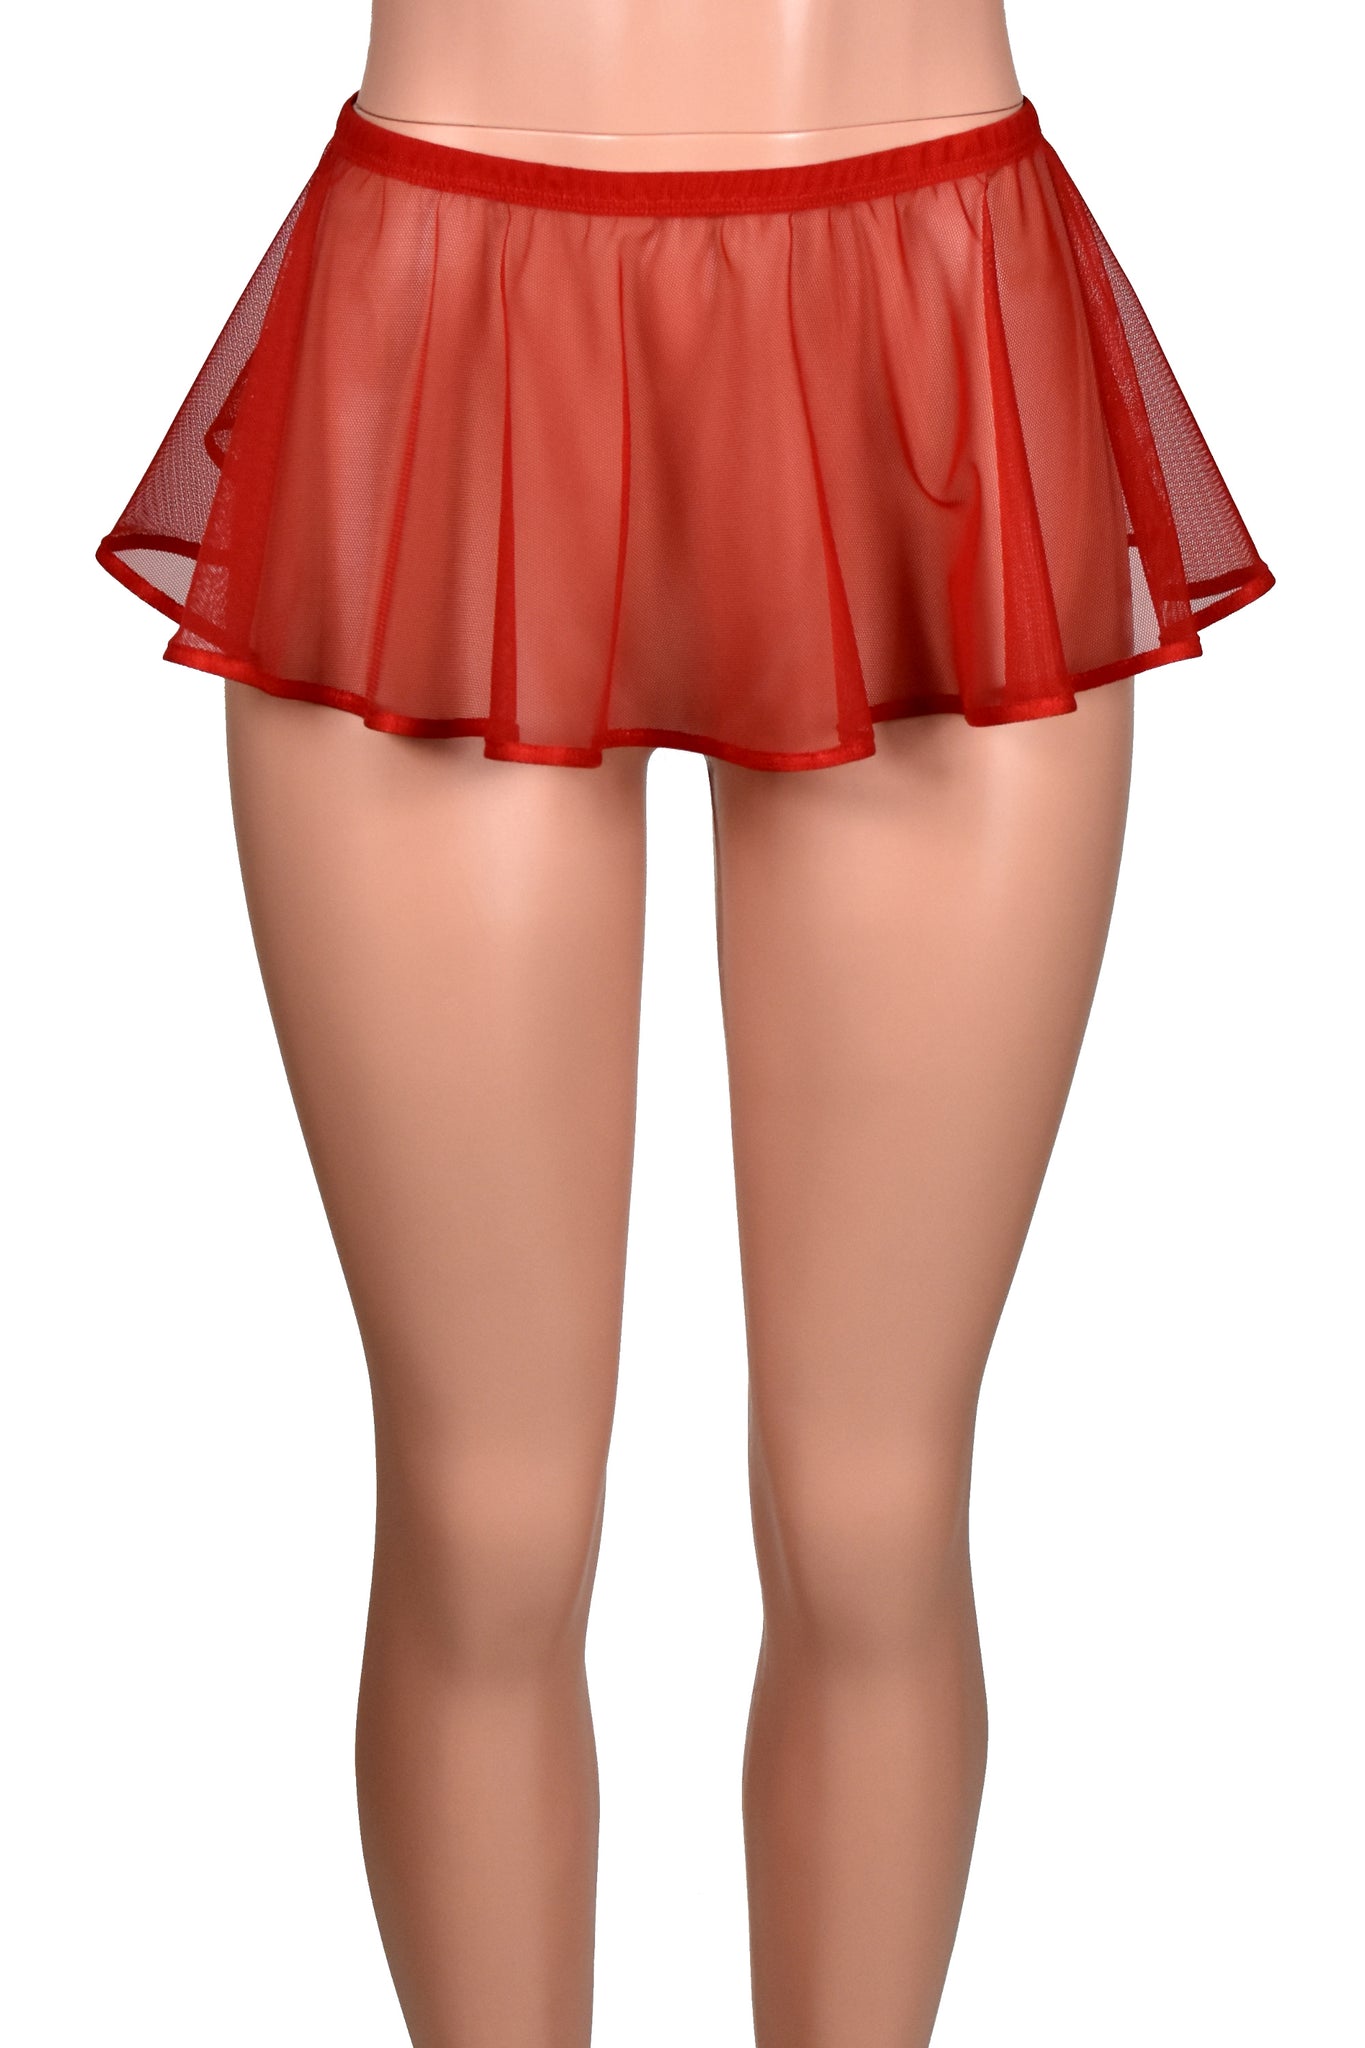 Red Mesh Micro Mini Skirt (8" long)